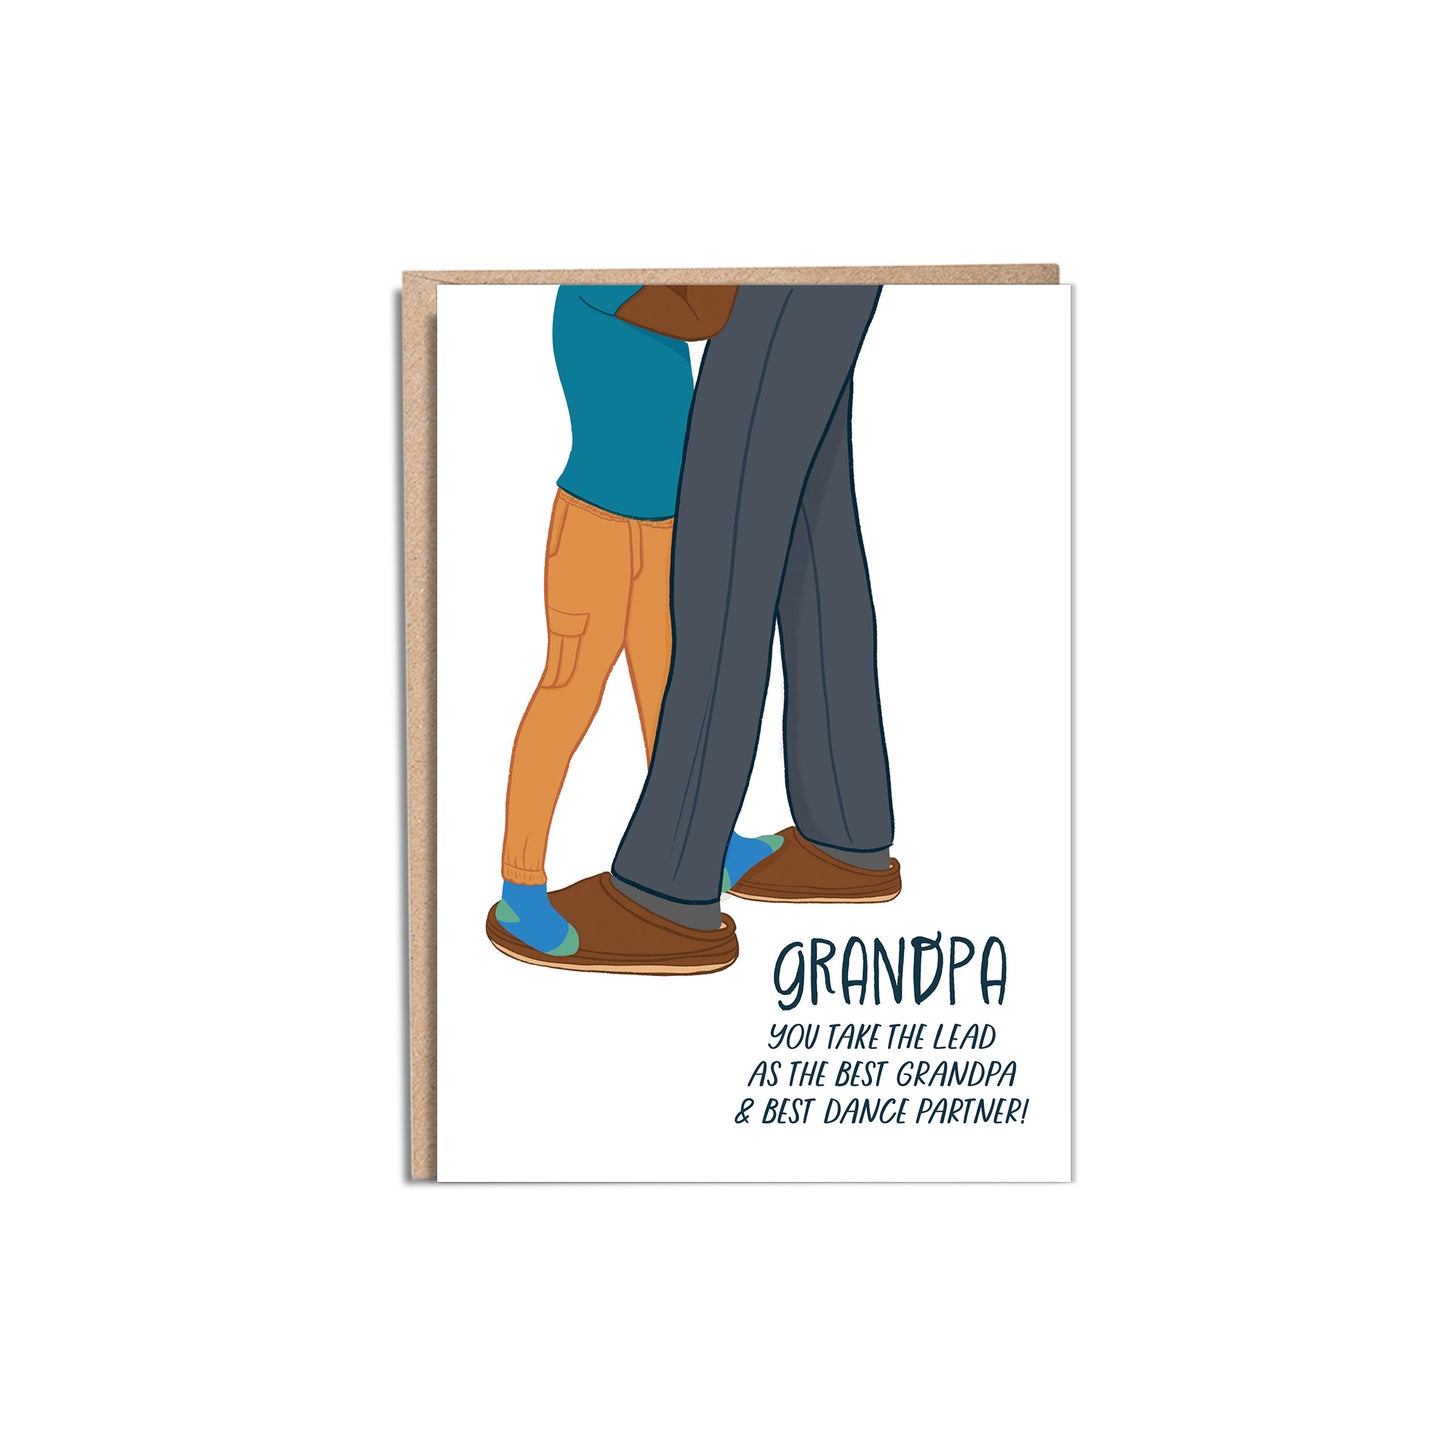 Best Grandpa 5x7” Grandpa Dancing greeting card from Goods Made By Digitrillnana, Ashley Fletcher